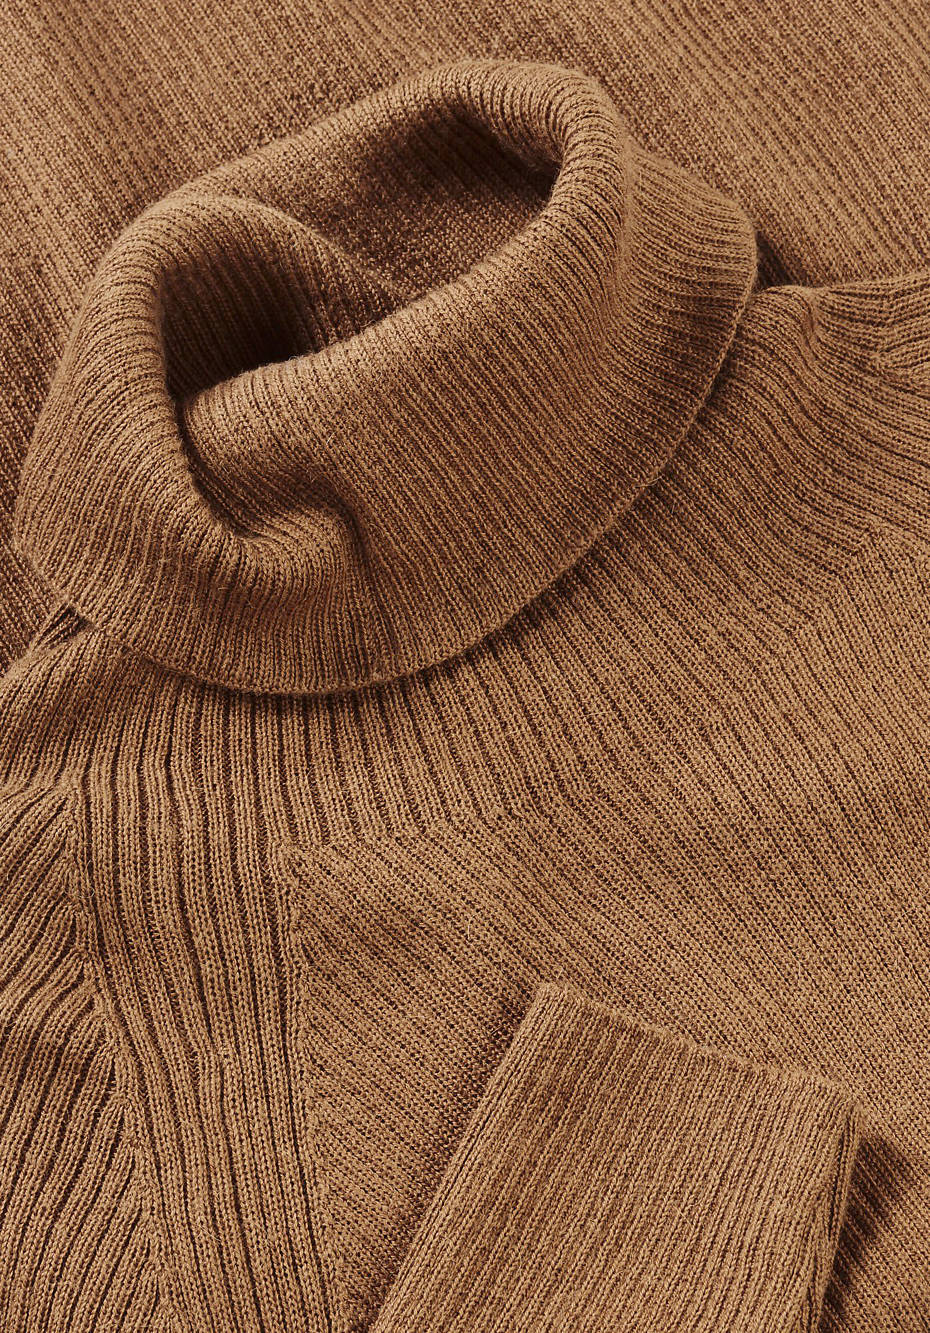 Turtleneck sweater made of alpaca with silk